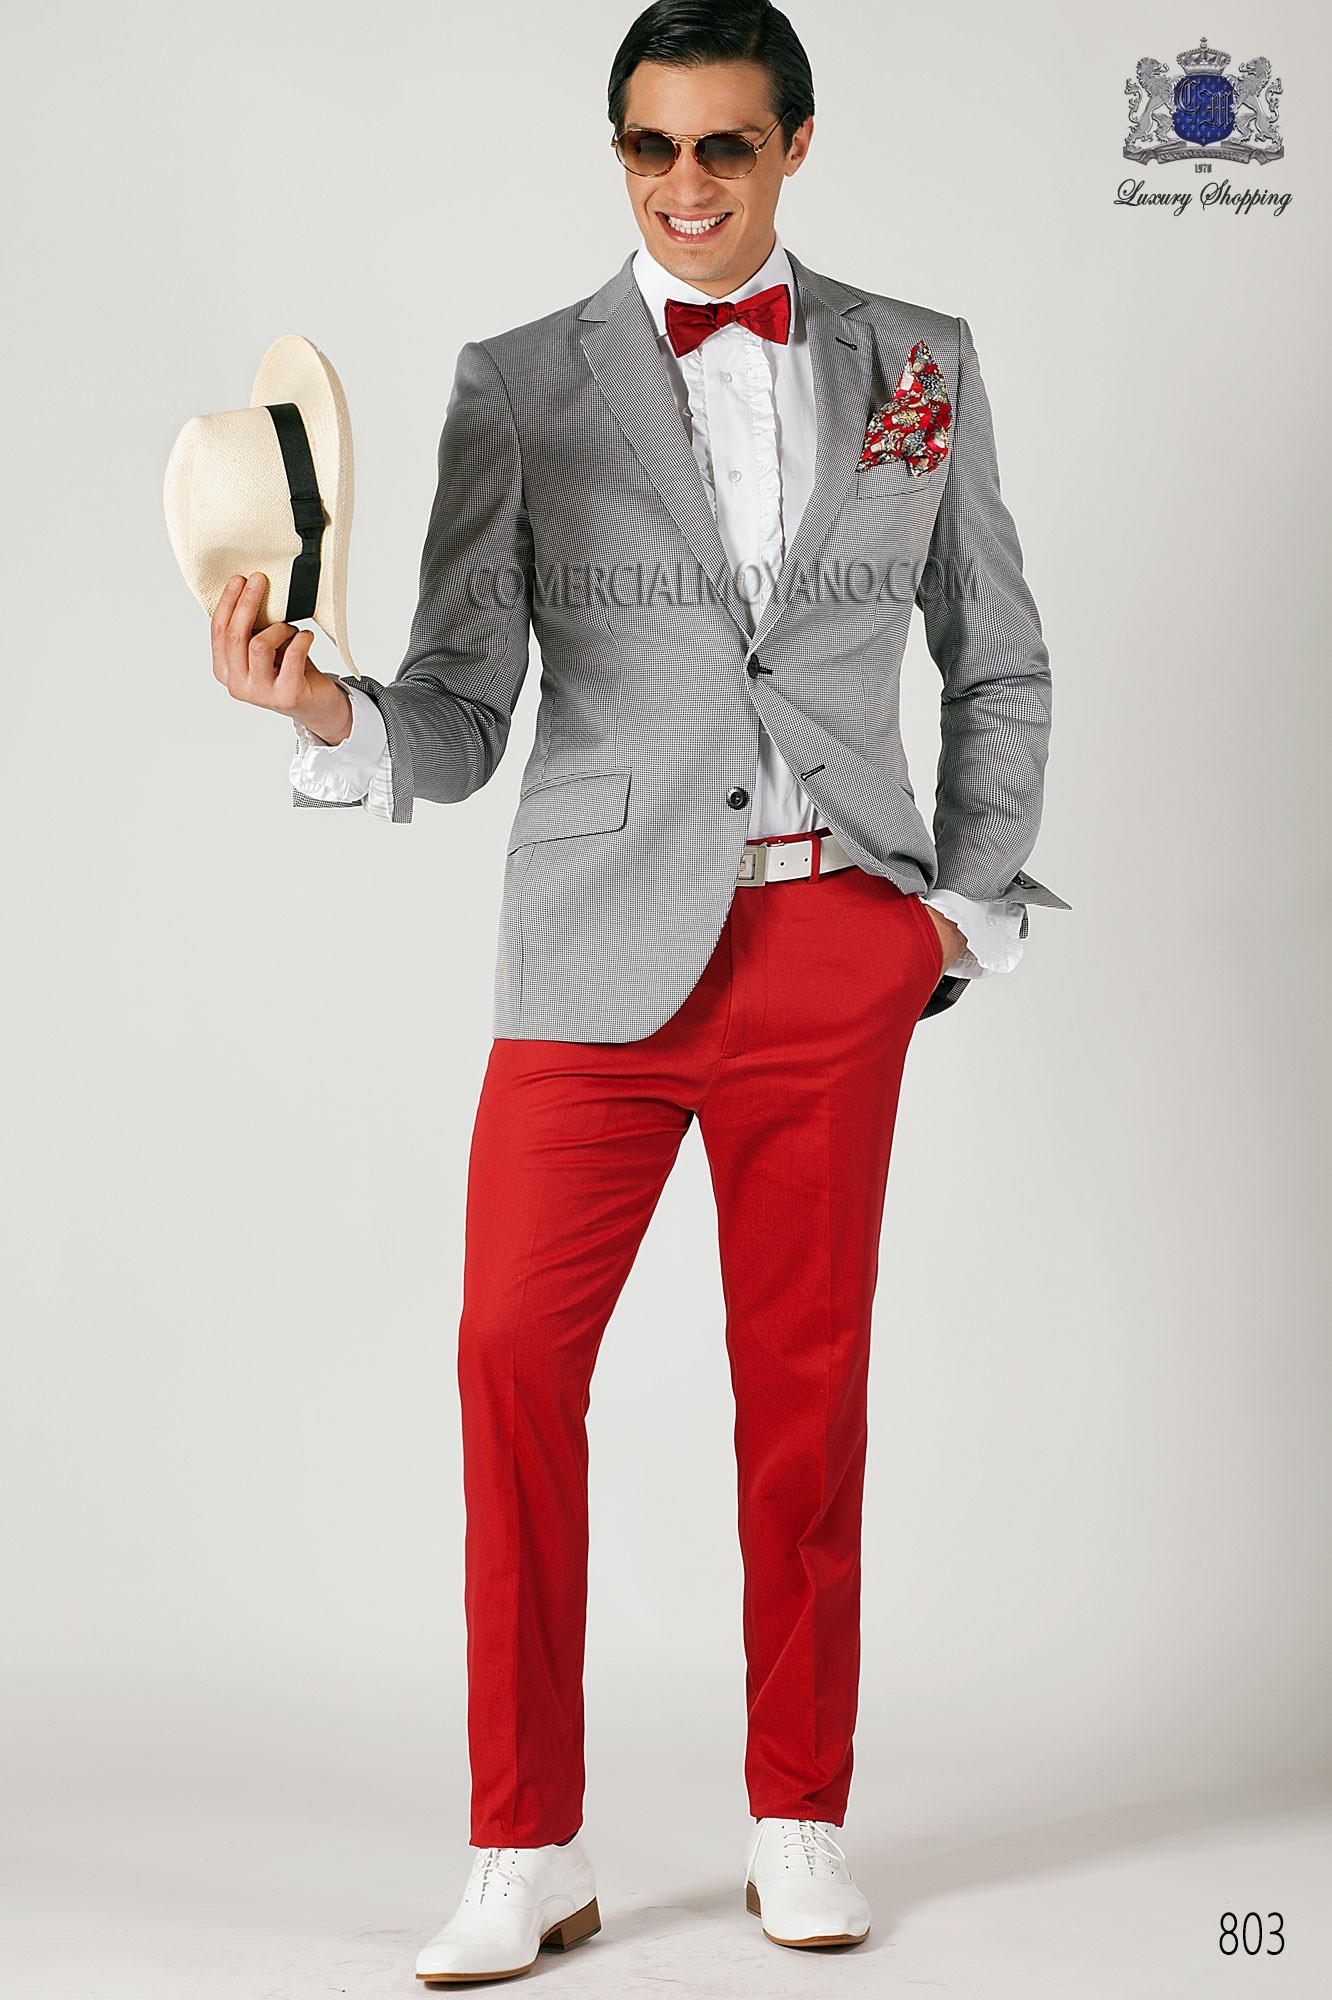 Hipster black men wedding suit model 803 Mario Moyano